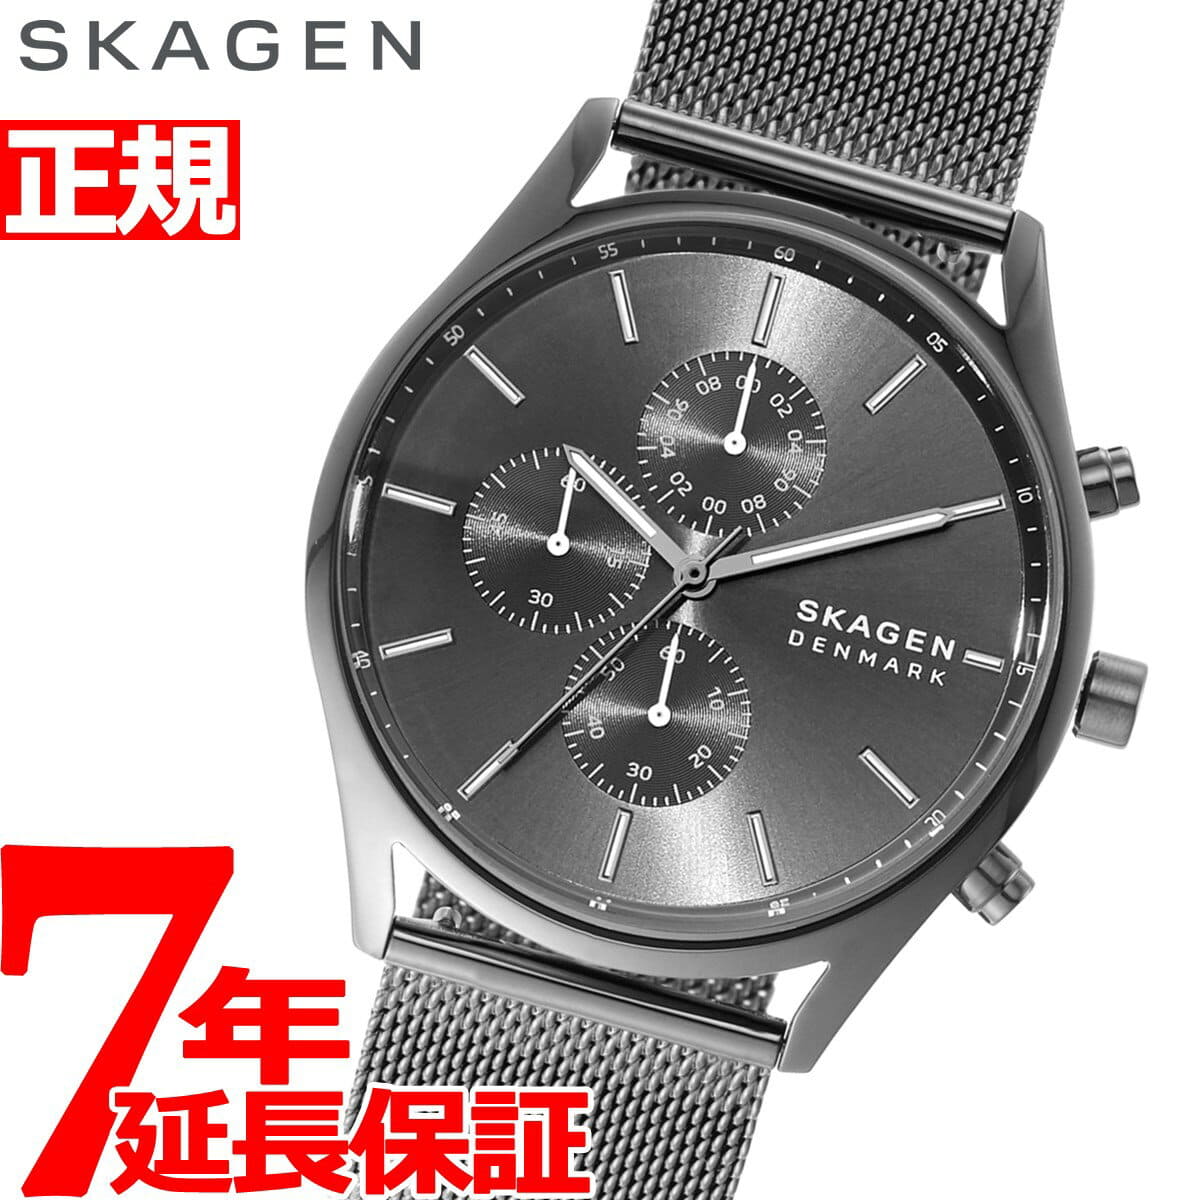 New]SKAGEN HOLST Men's Chronograph Watch SKW6608 - BE FORWARD Store